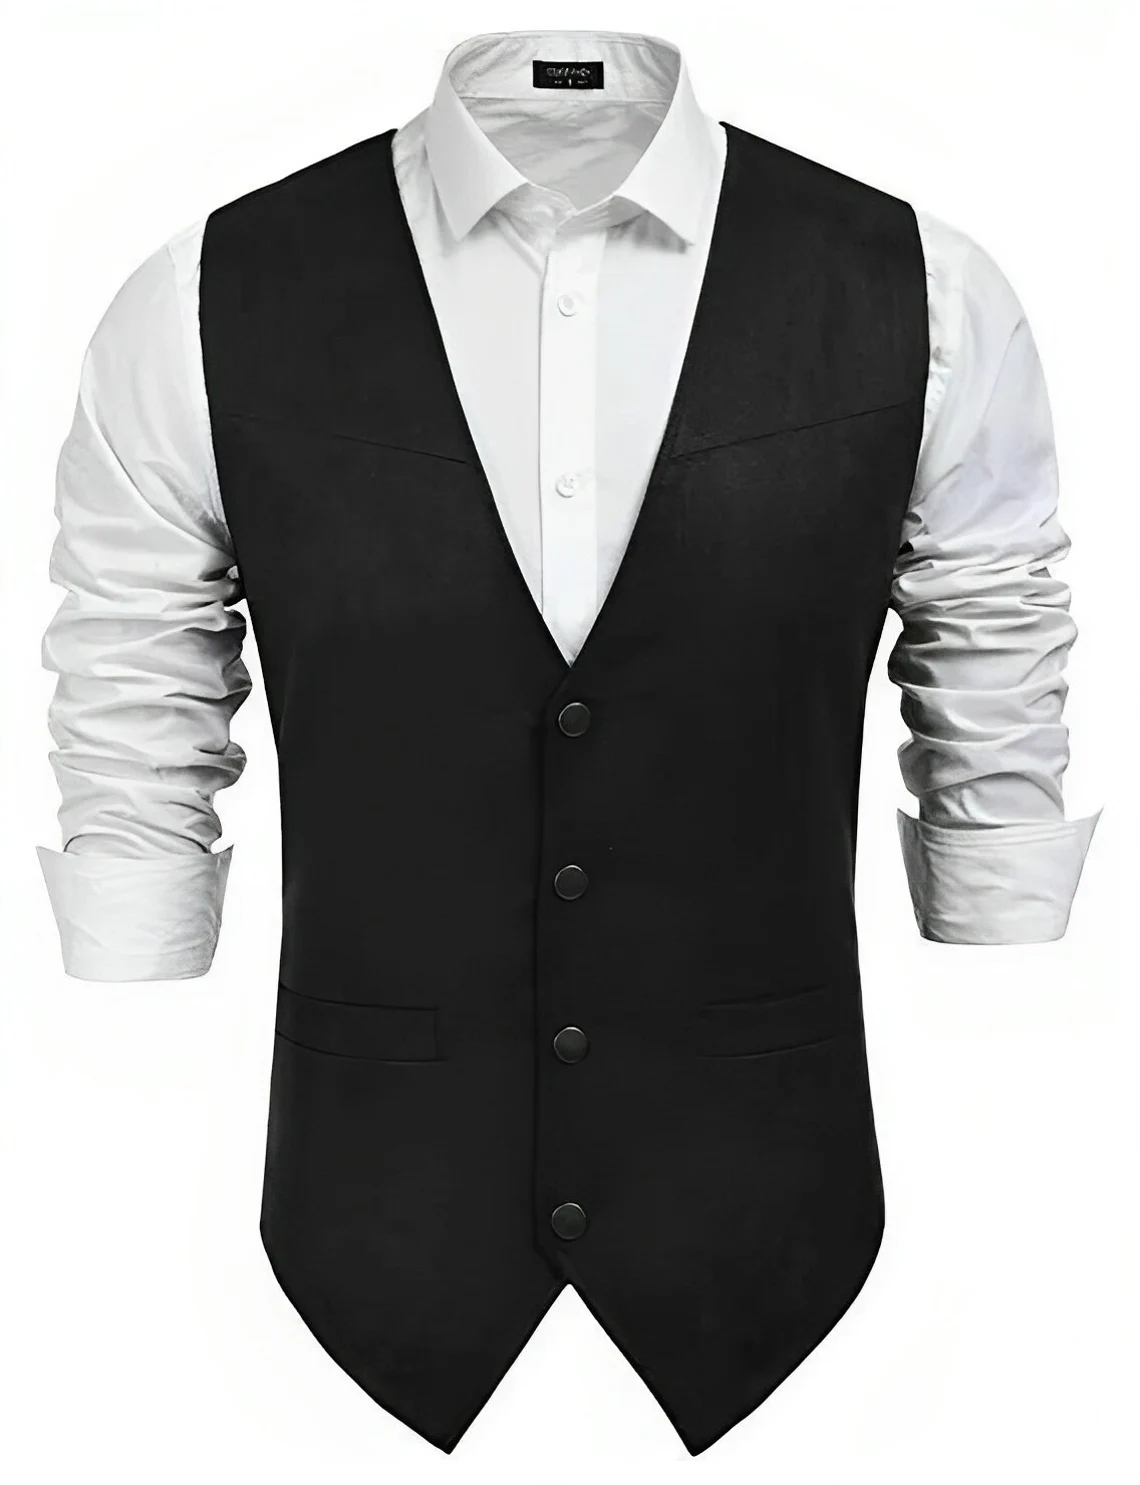 Black linen vest for men - linen waistcoat for man - Elegant Vest - Jacket for guy - guy vest - traditional linen 4button vest wedding Vest